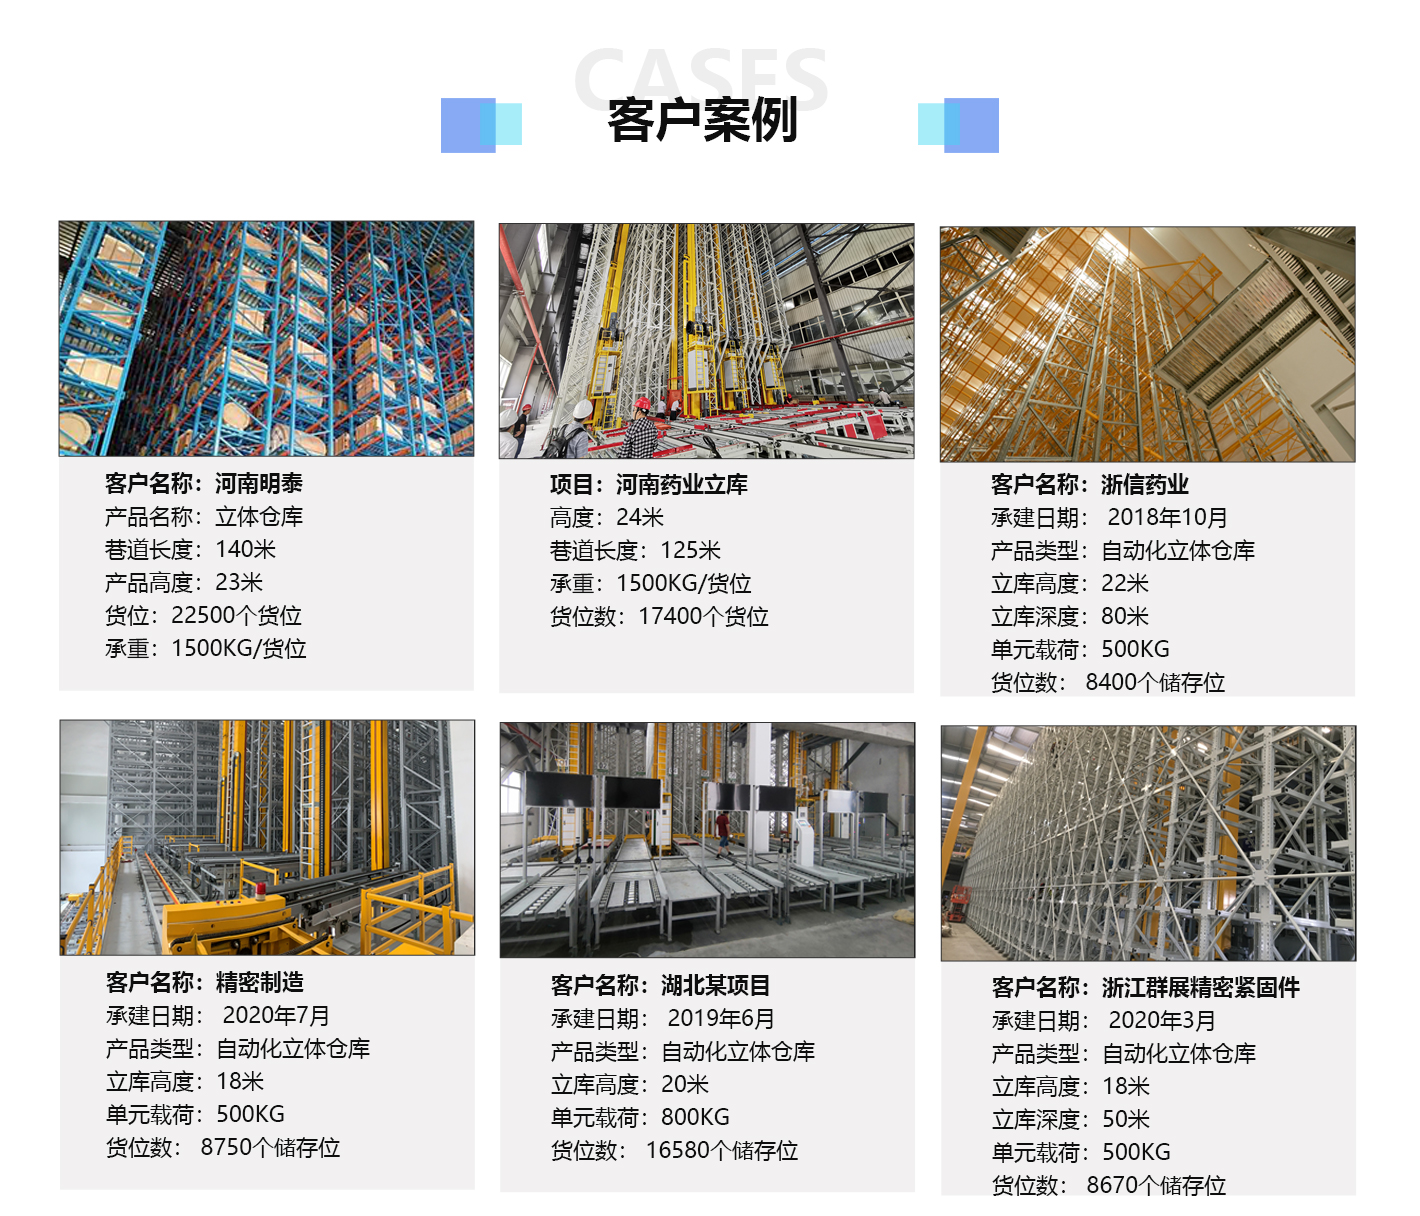 Hanyang cargo storage rack, 6-meter heavy-duty crossbeam type rack, thickened large narrow roadway, bearing 1-6 tons